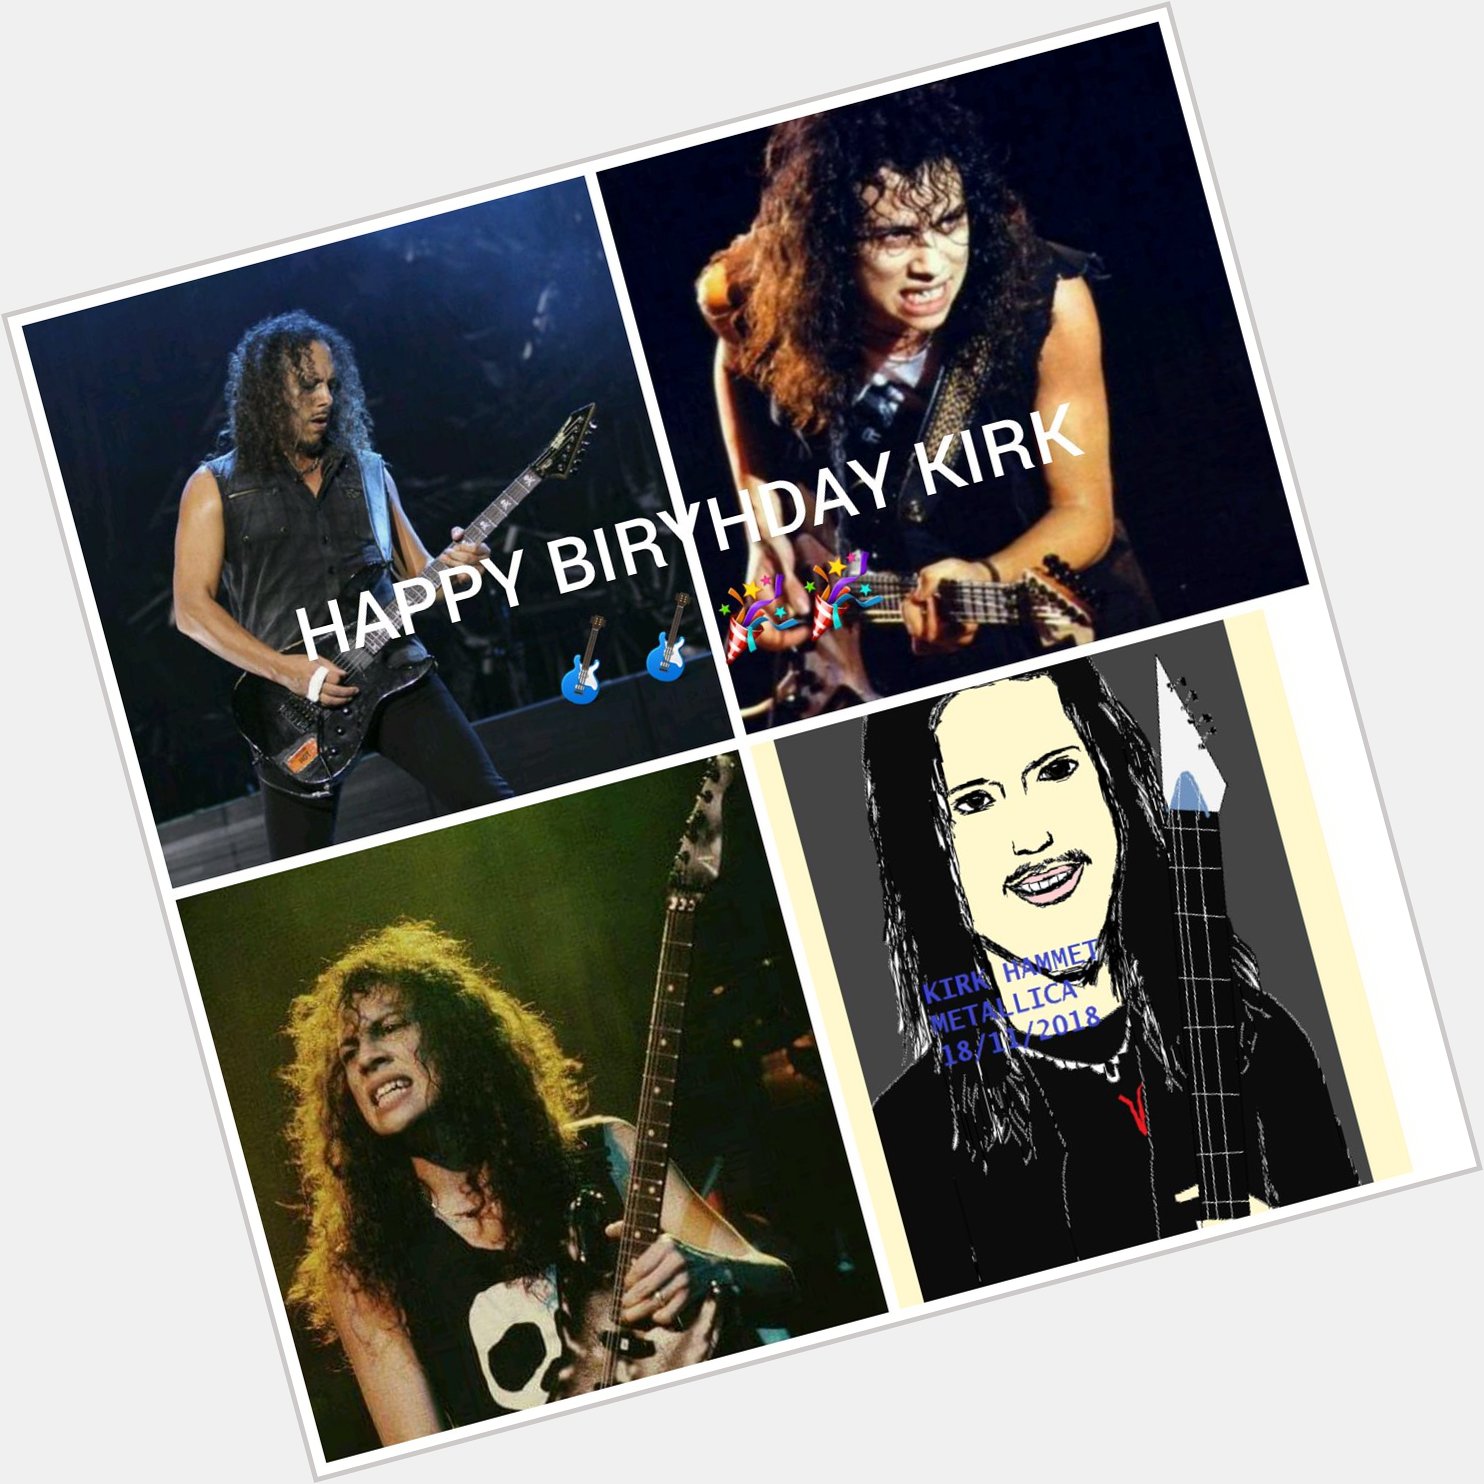  Happy birthday Kirk Hammett       wish u the best 